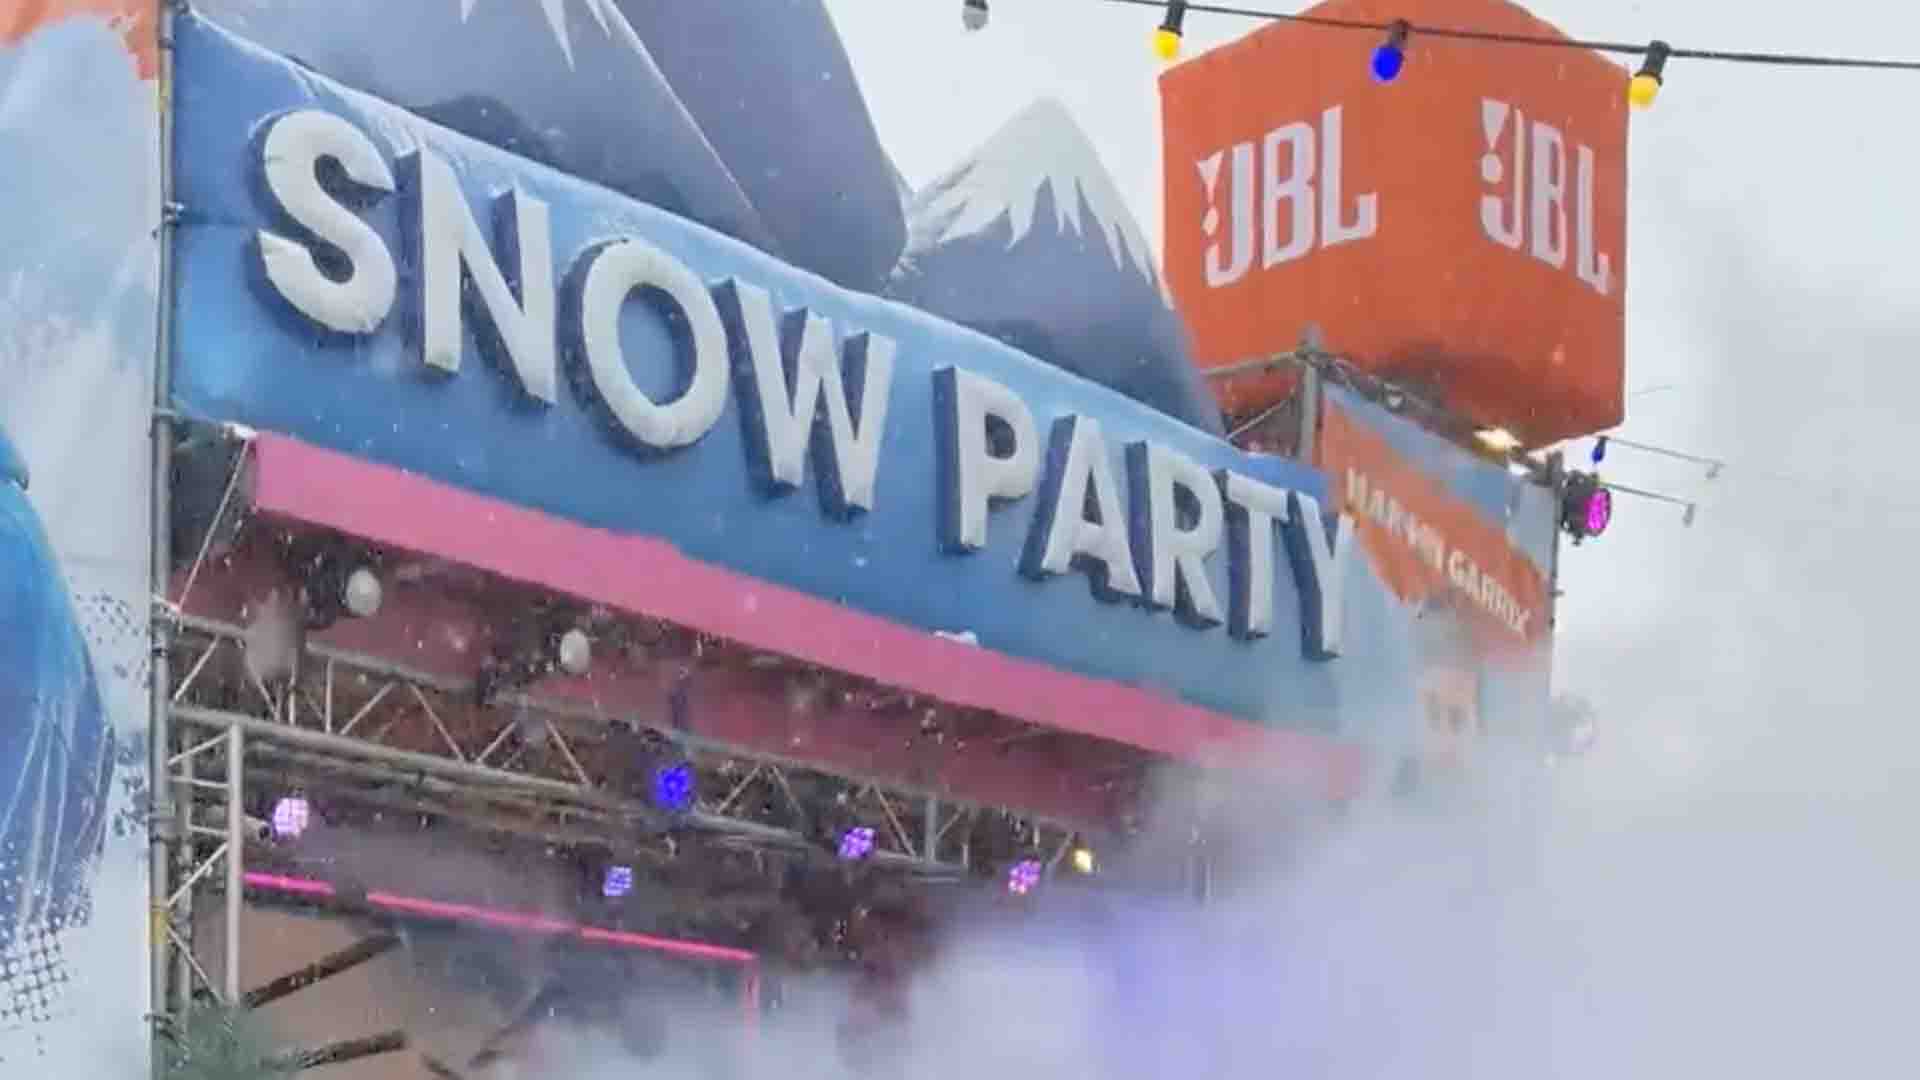 video / JBL Snow Party